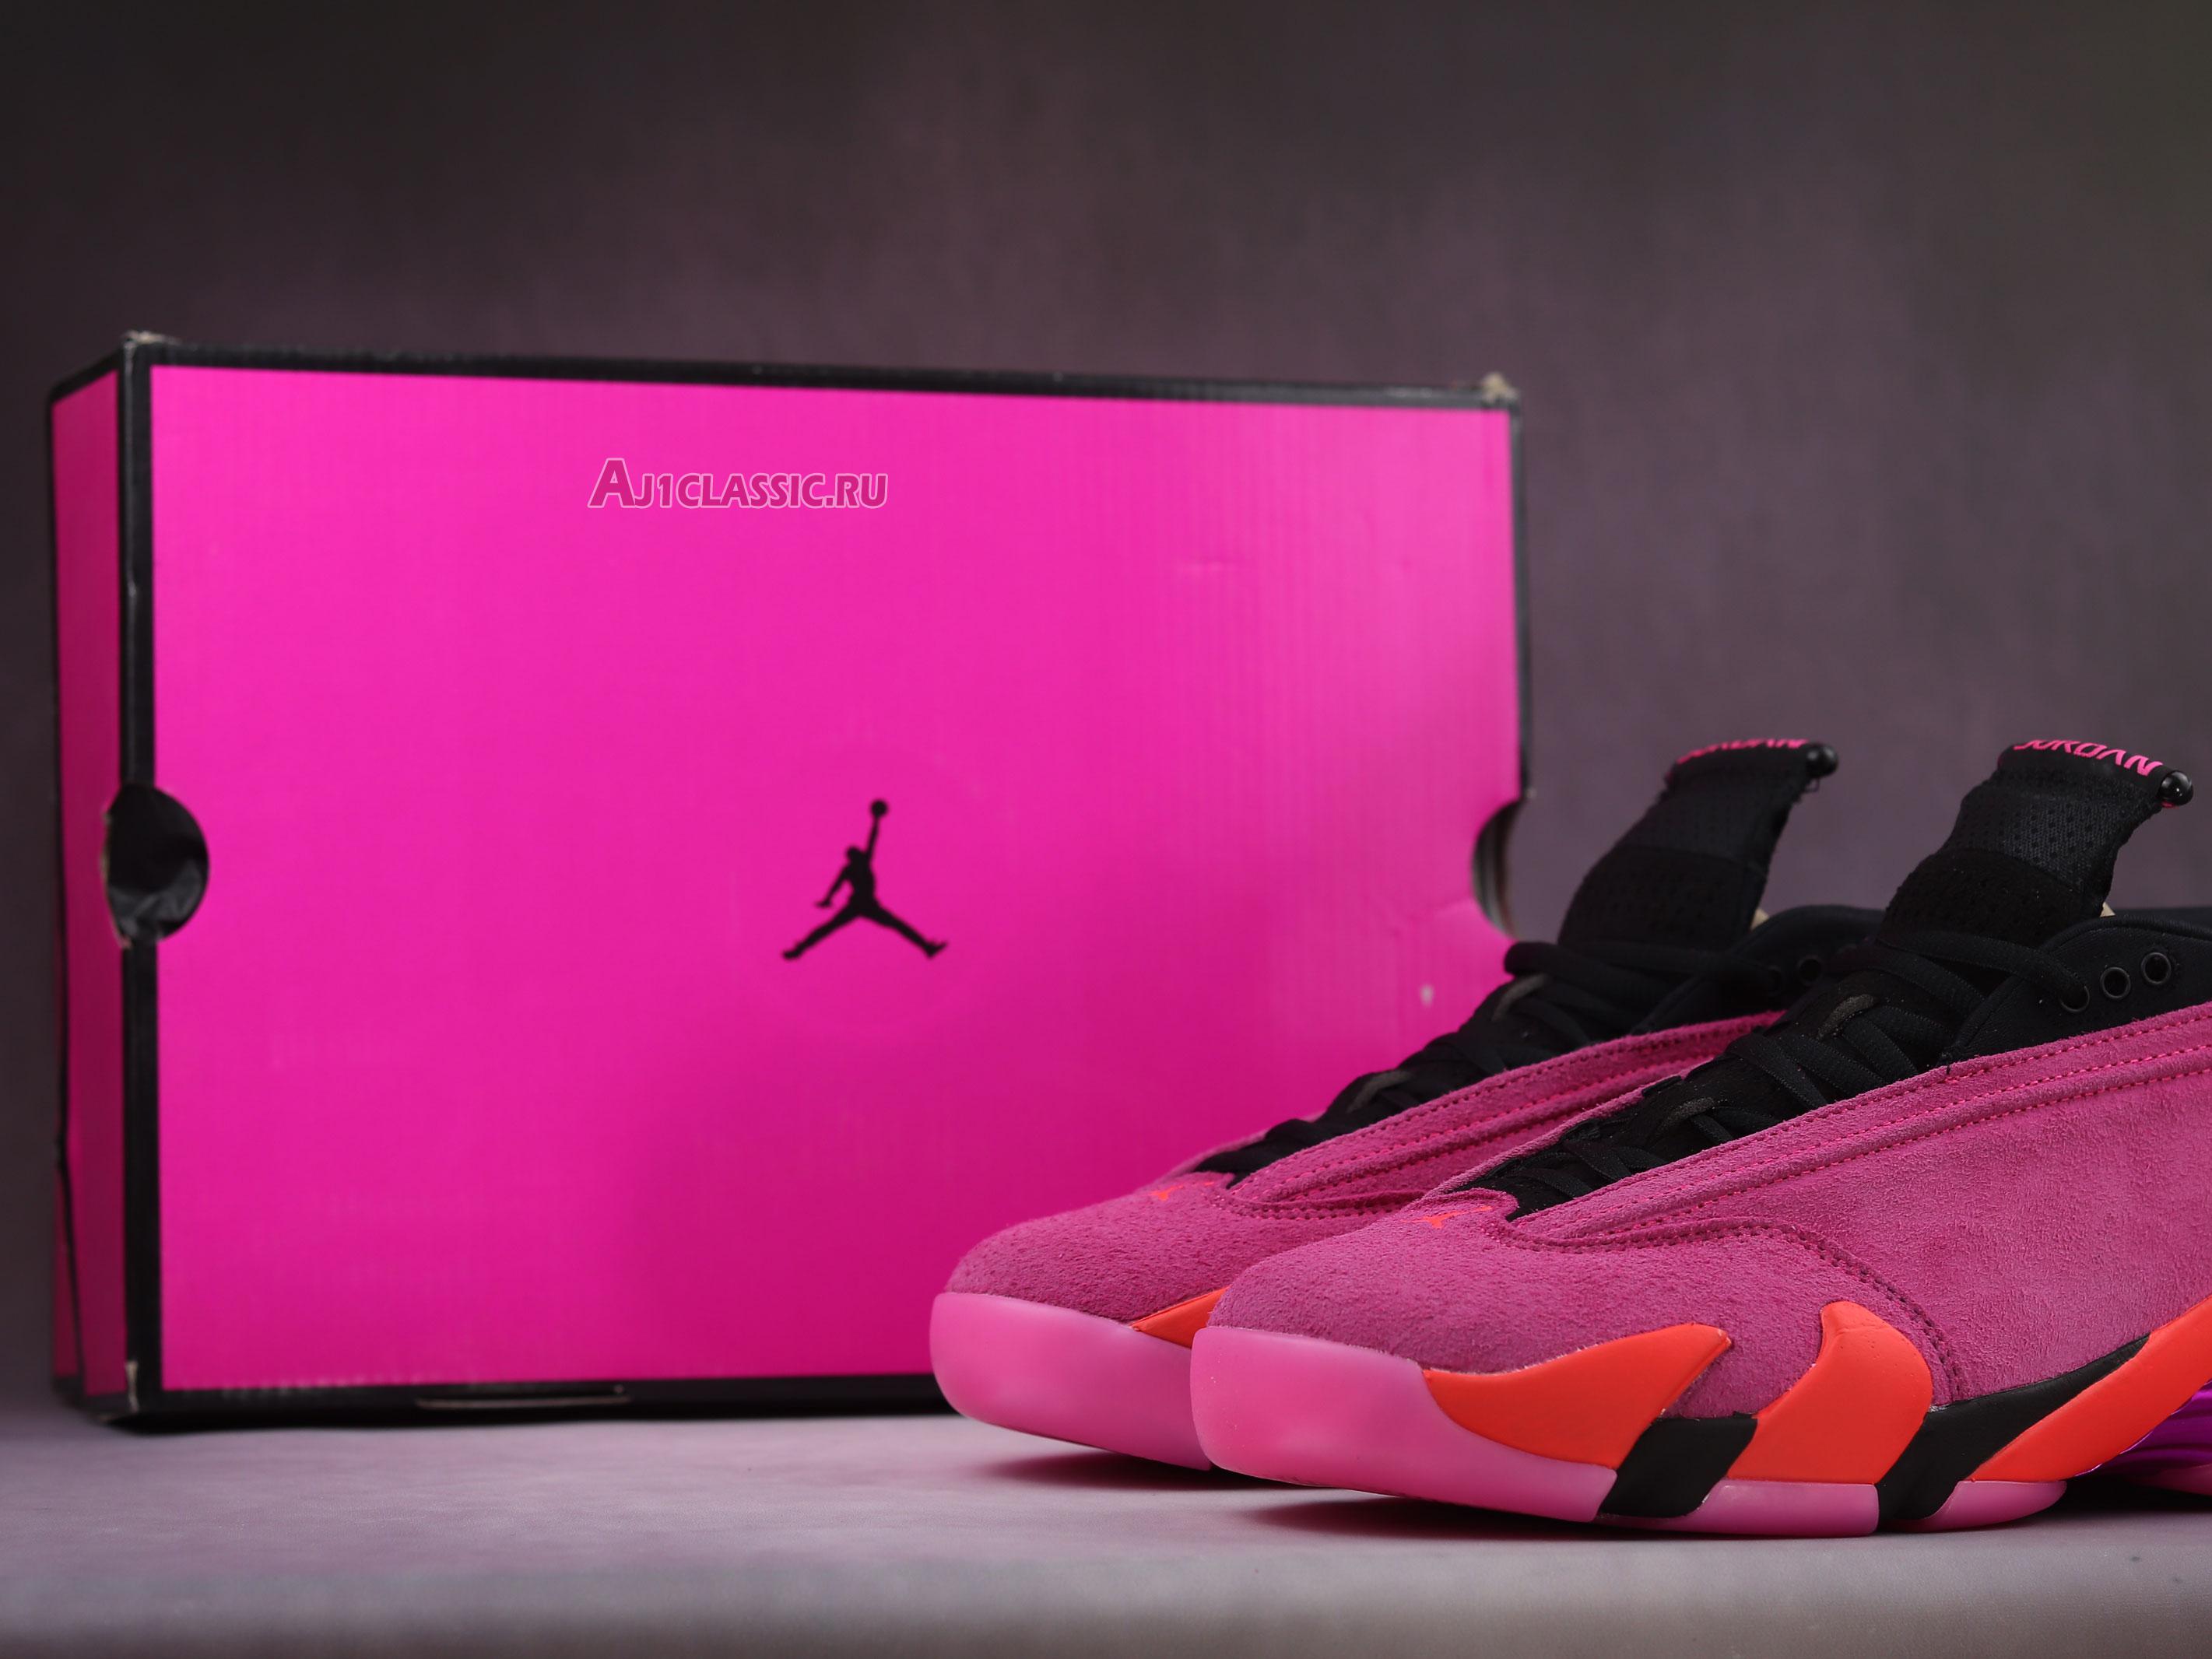 Air Jordan 14 Retro Low Shocking Pink DH4121-600 Pink Blast/Black/Flash Crimson Sneakers